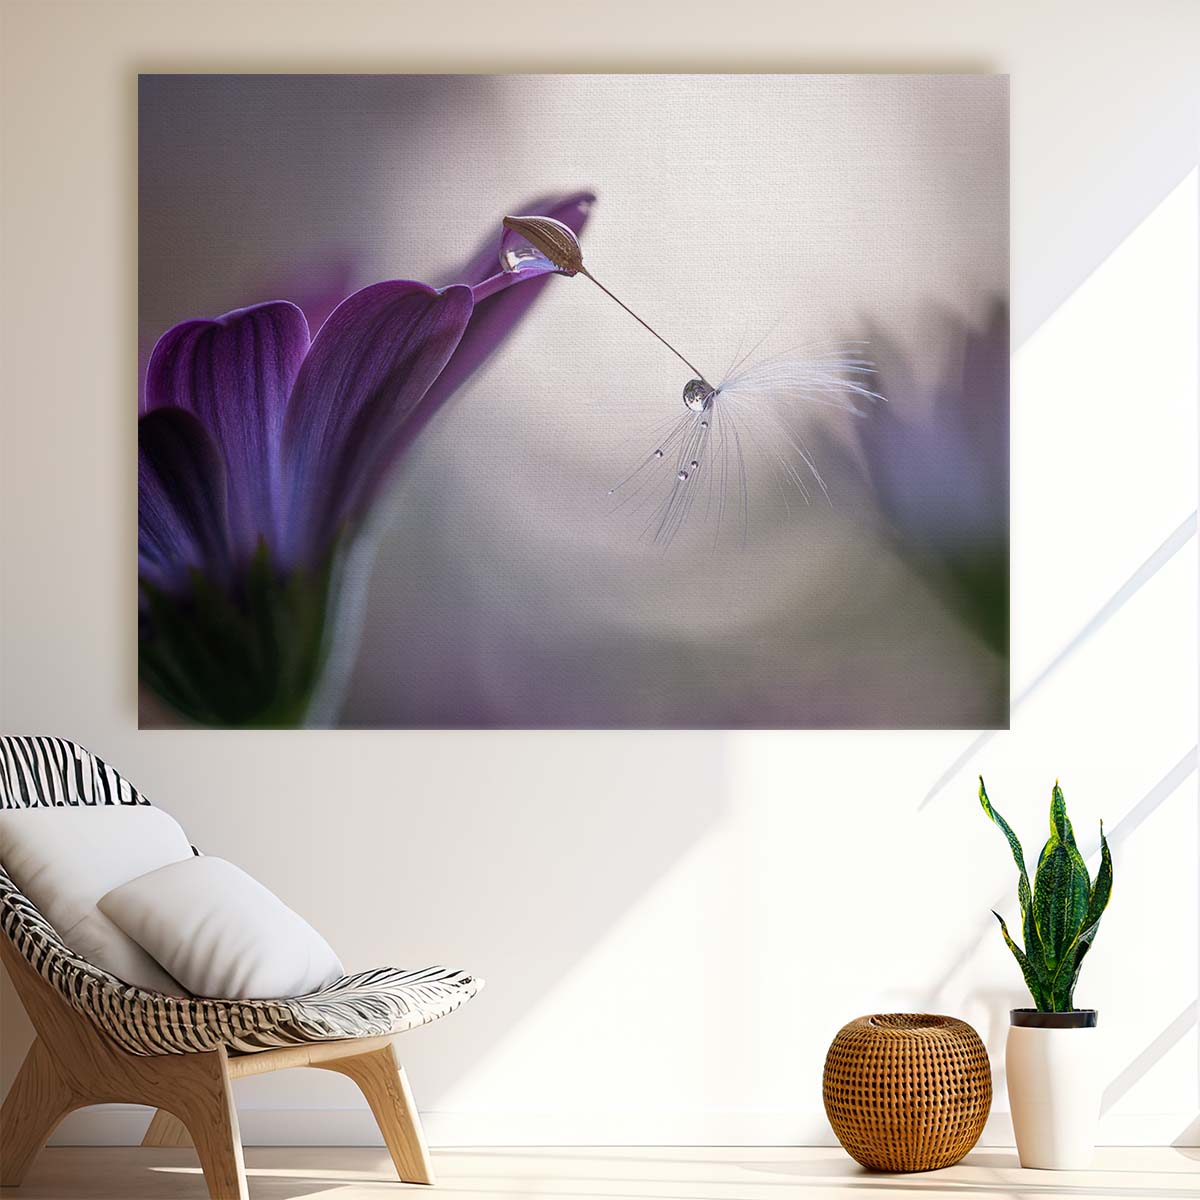 Delicate Purple Dandelion Dewdrops Macro Wall Art by Luxuriance Designs. Made in USA.